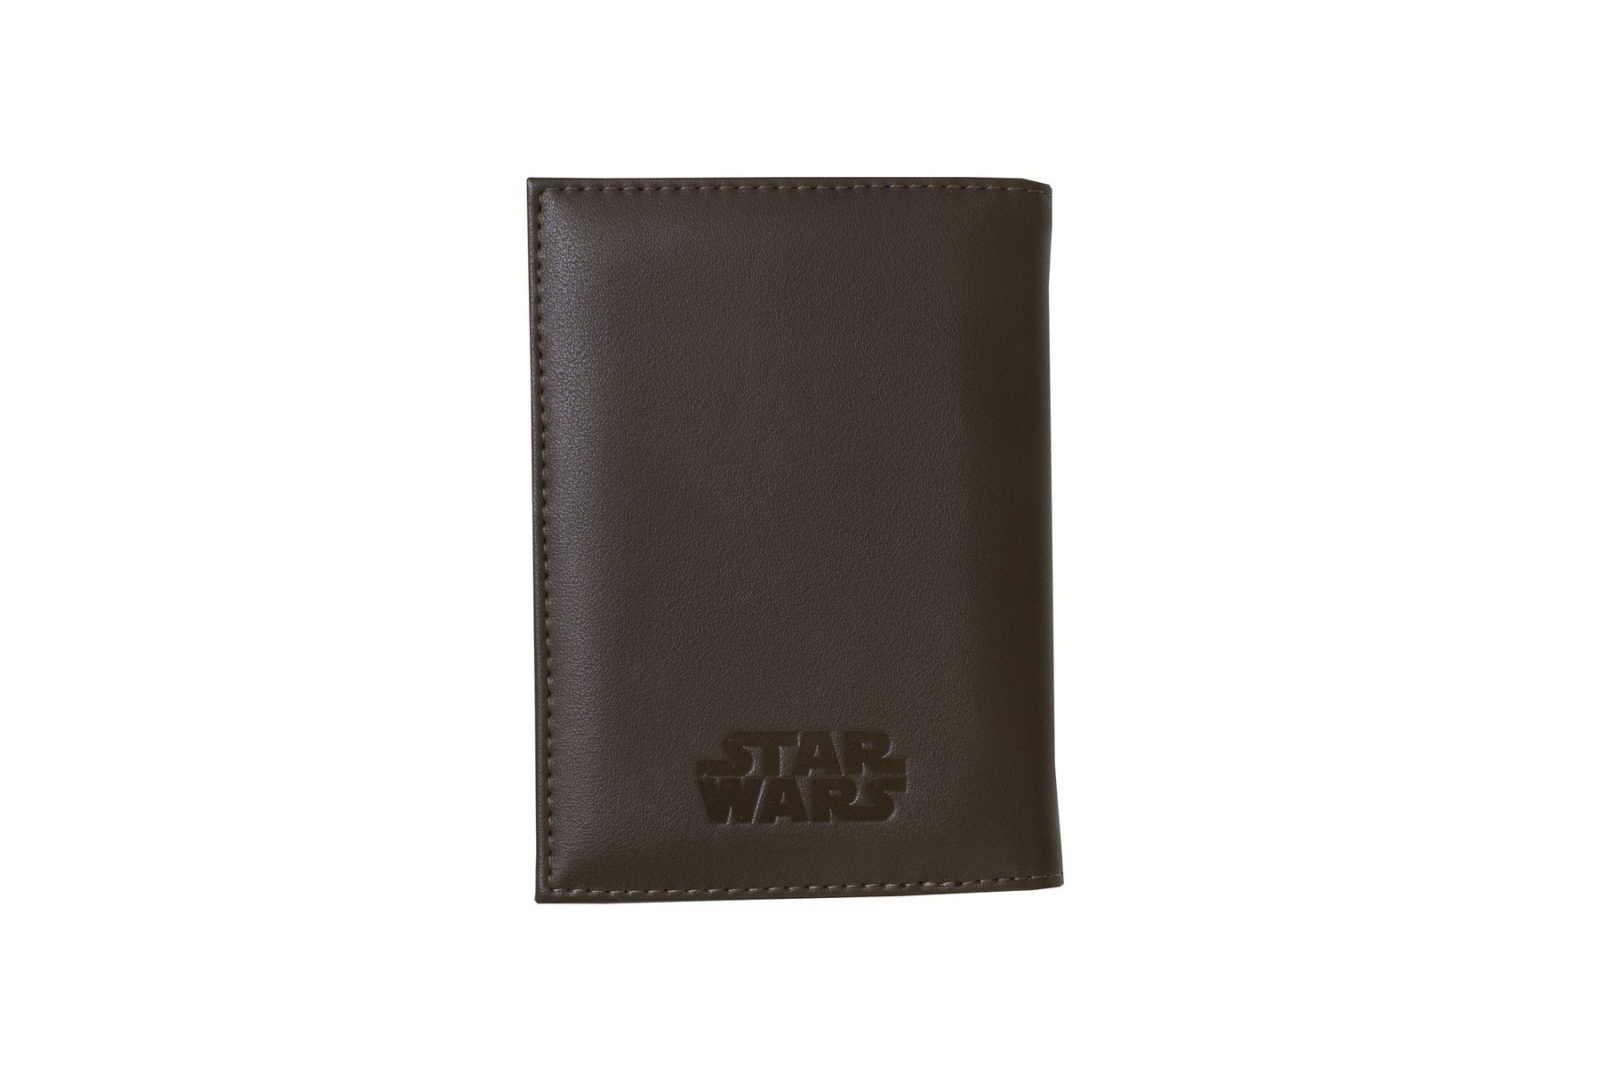 Cakeworthy x Star Wars Tatooine Passport Holder